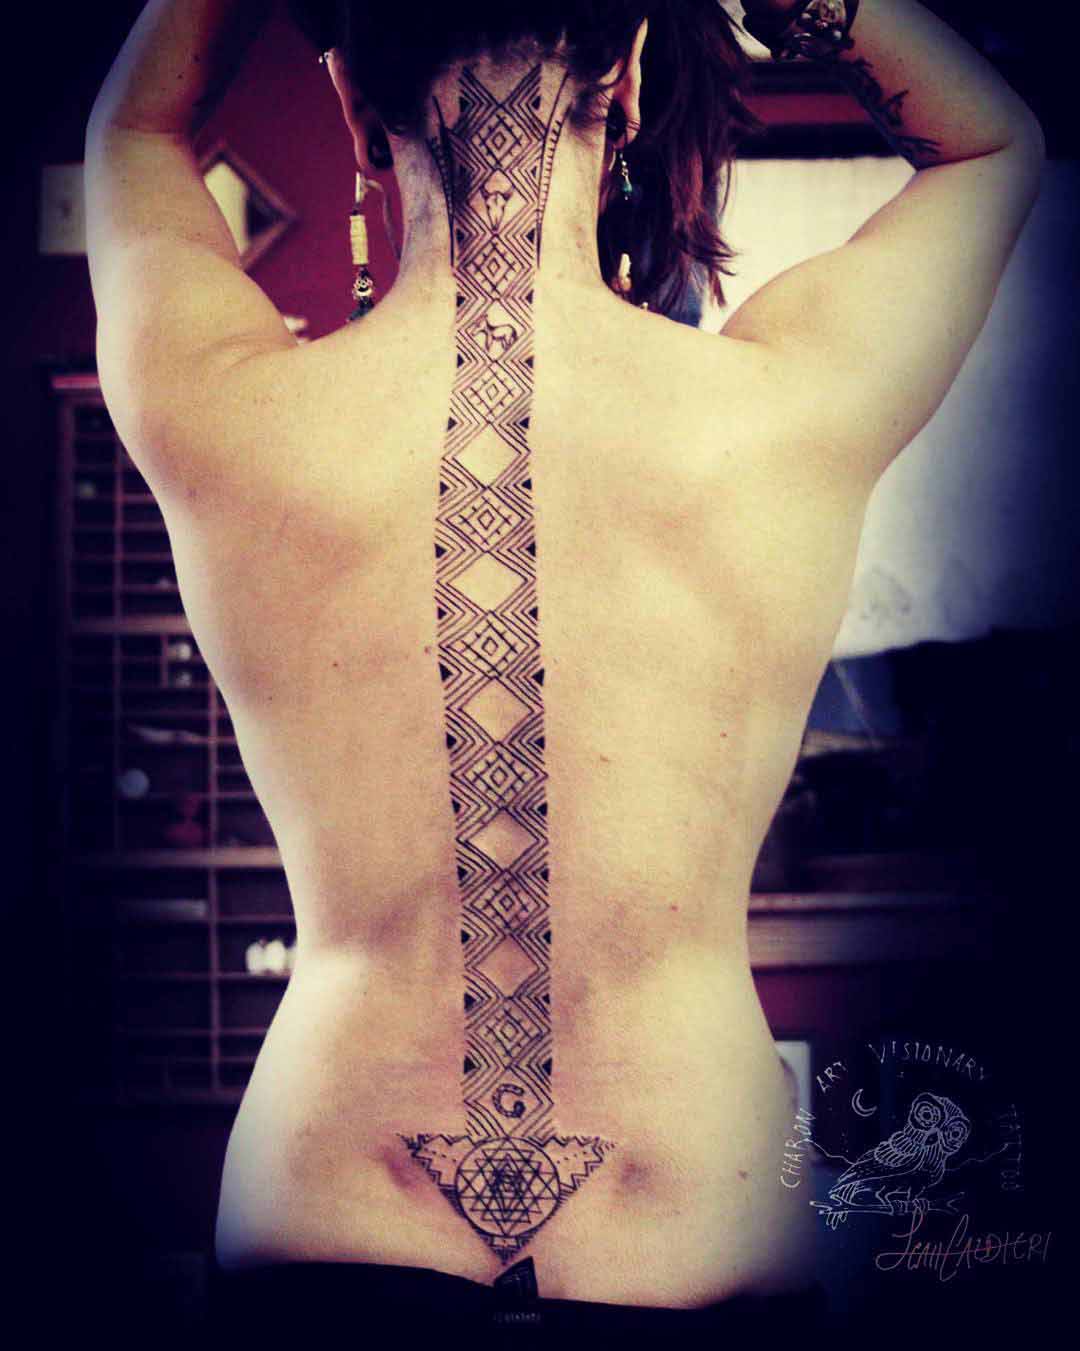 Tattoo Going Down Spine by charonarttattoo